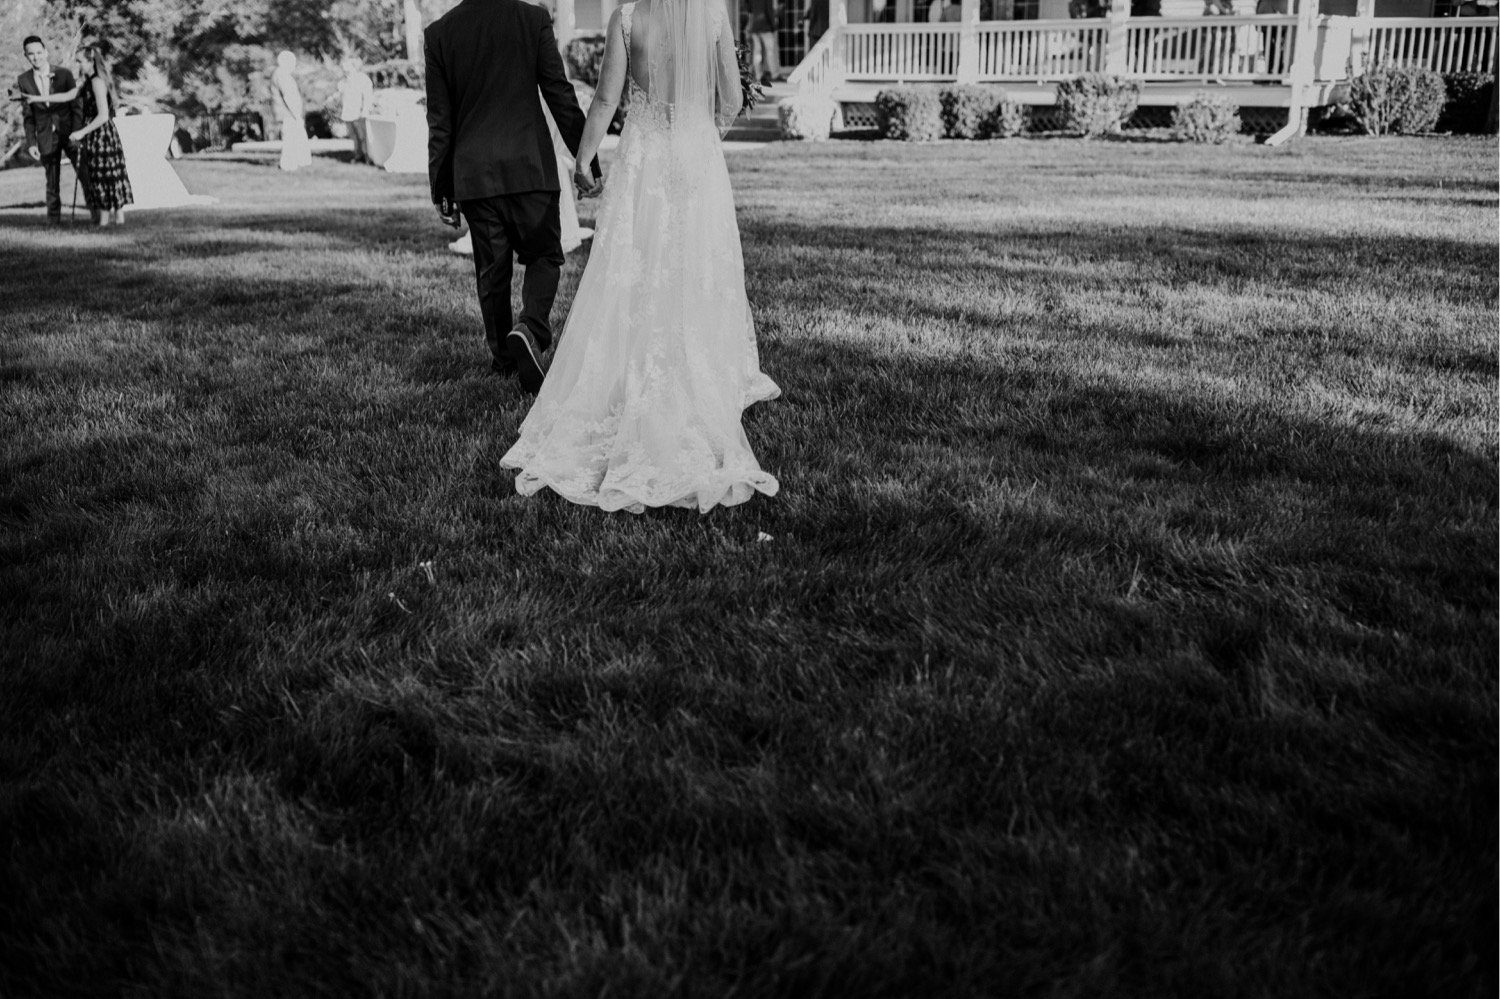 069_Alyssa&Vince-649-2_Hawthorne-house-kansas-city-wedding-photography-missouri-parkville-kelsey-diane-spring-bride-groom.jpg